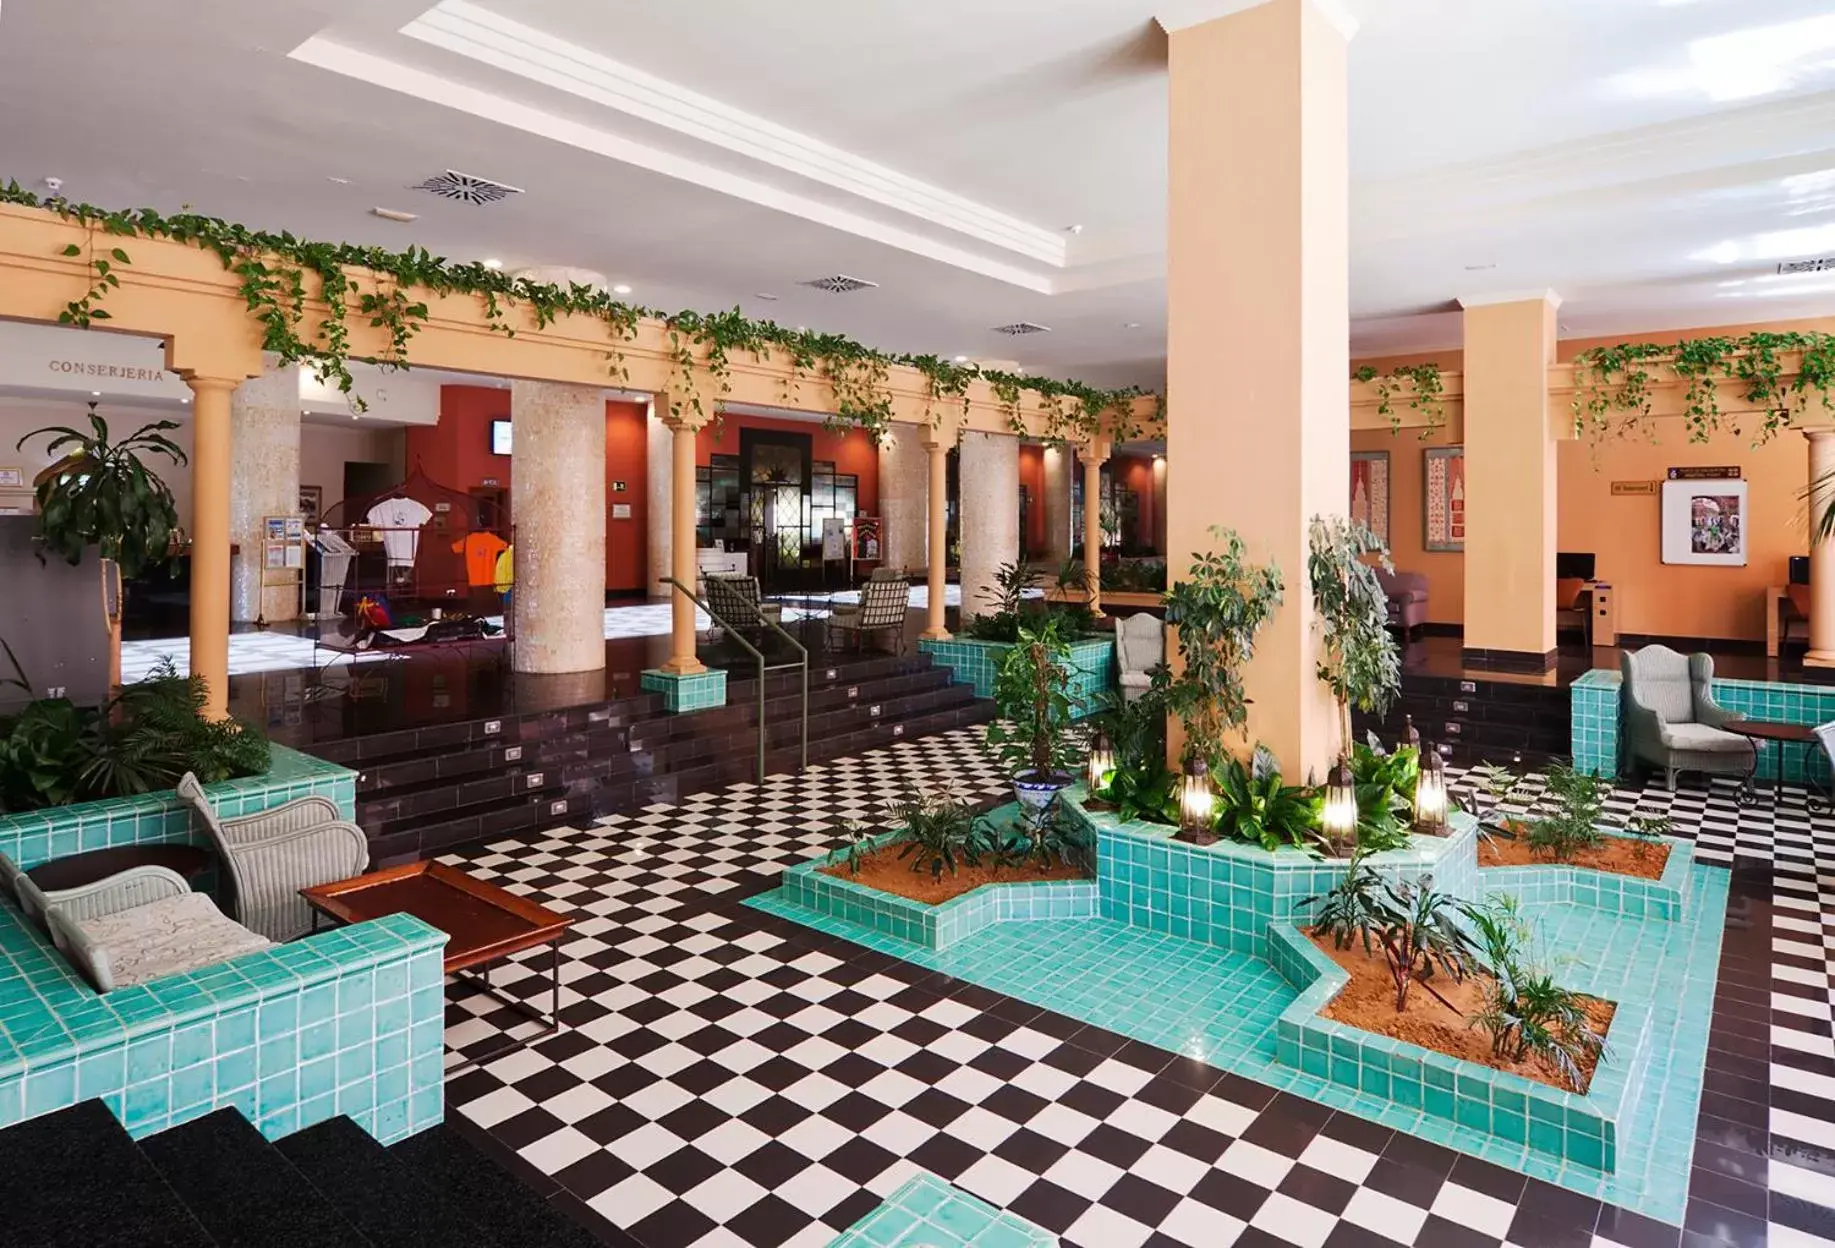 Area and facilities in Playacanela Hotel